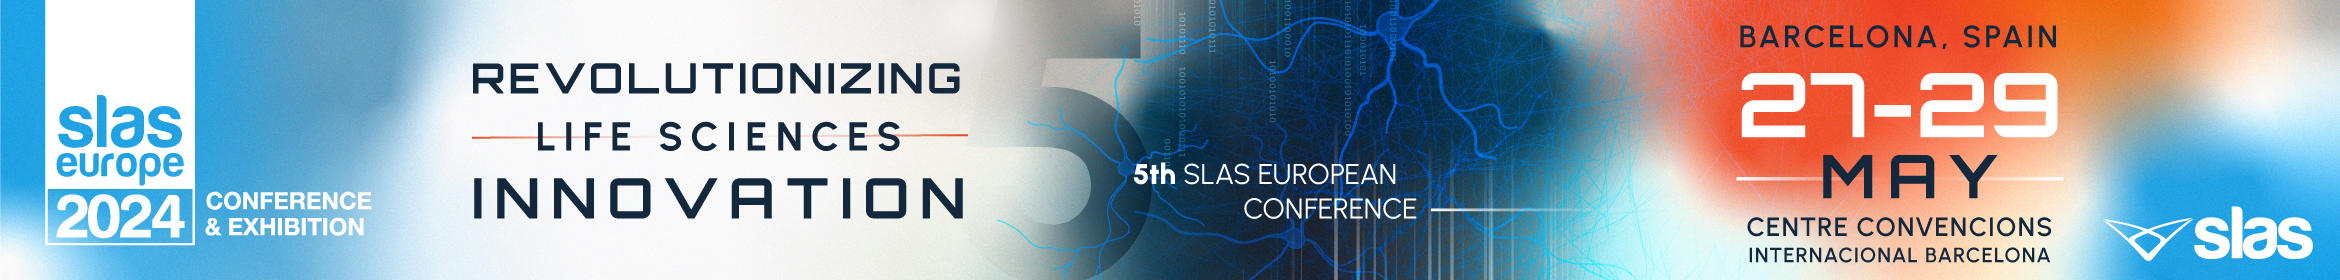 SLAS Europe 2024 Main banner